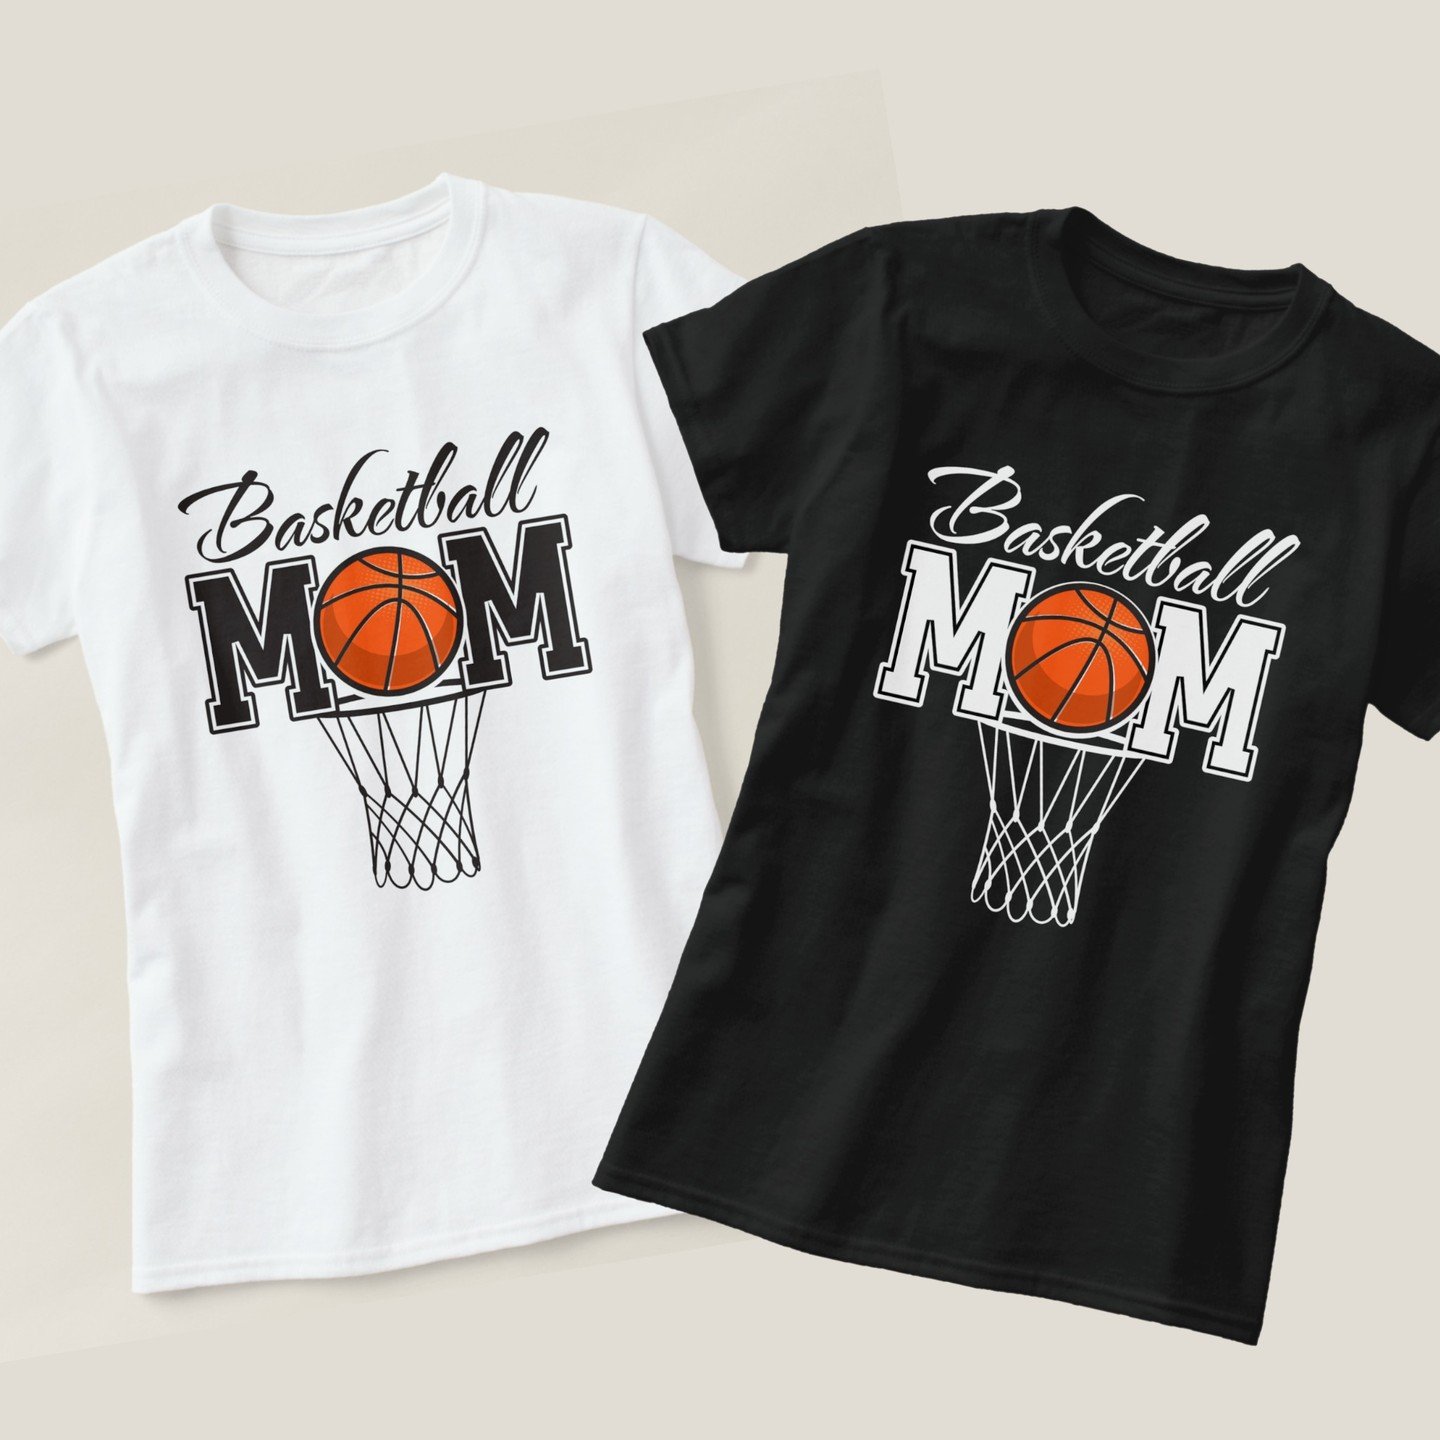 For the Basketball Mom! #linkinbio
.
#zazzle #redbubble #teepublic #zazzlemade #shirt #stickers #mugs
#basketballmom #mothersdaygift #mothersday #basketball